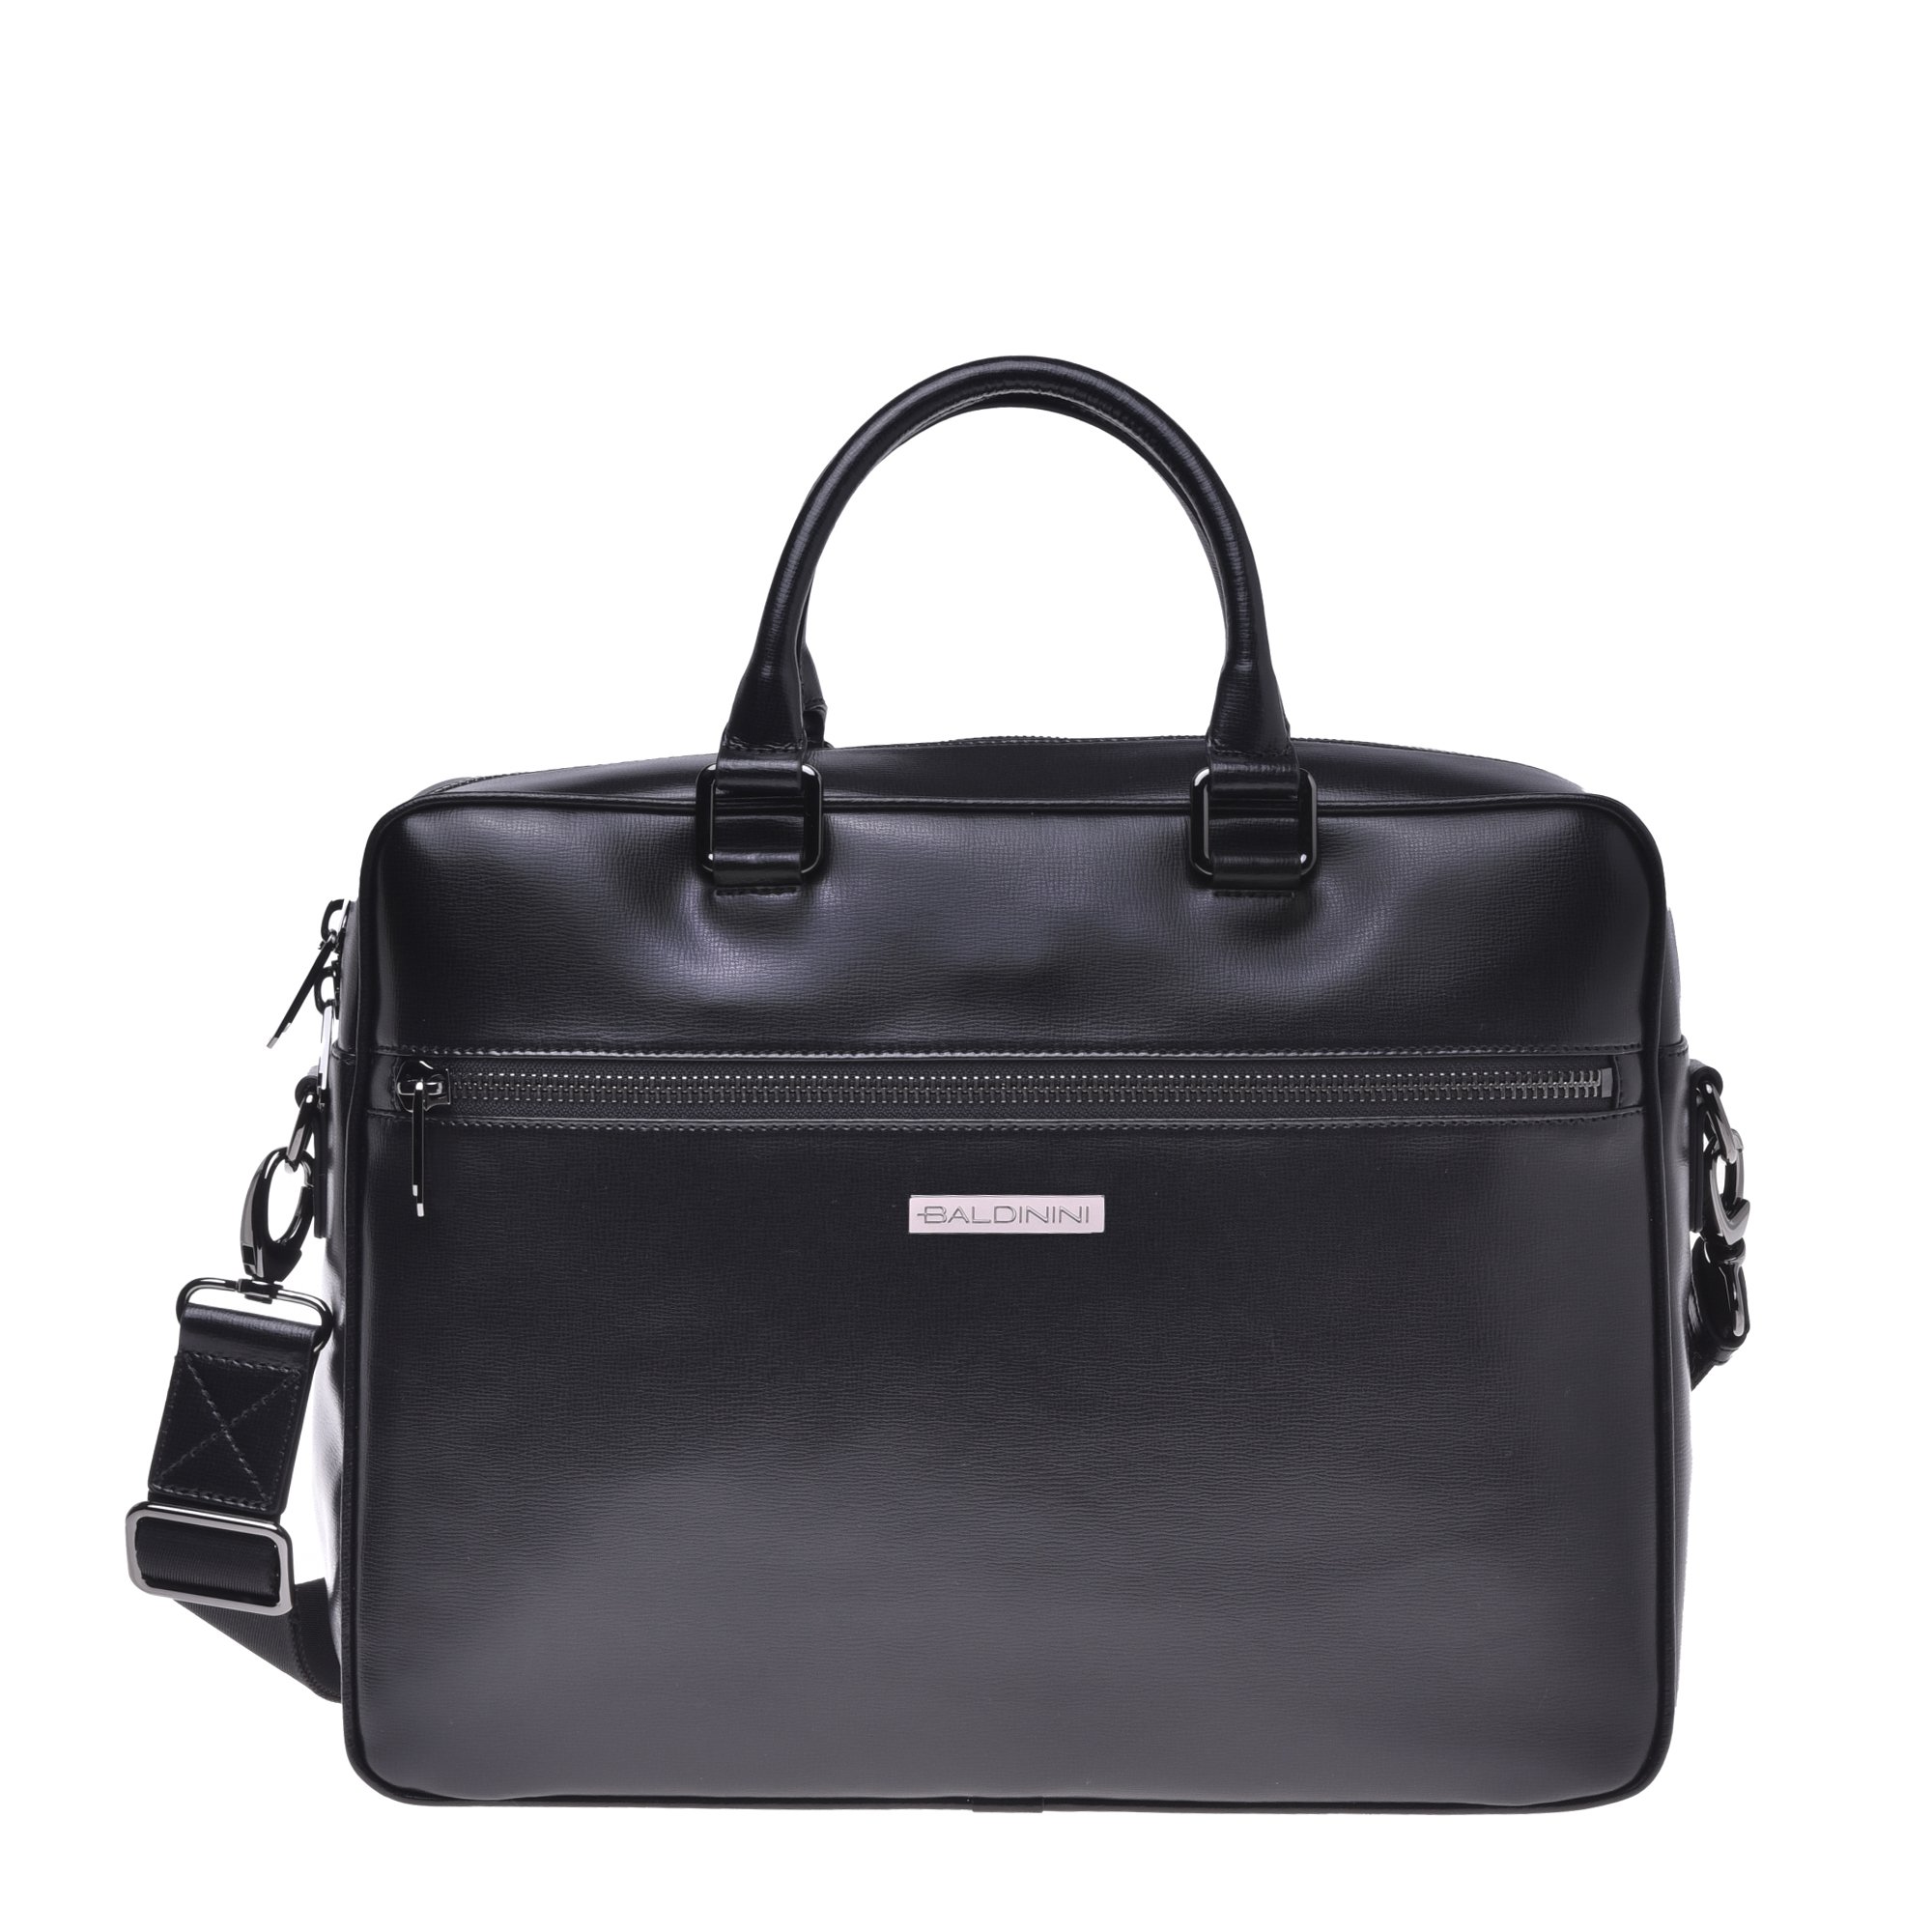 Professional bag in black saffiano image